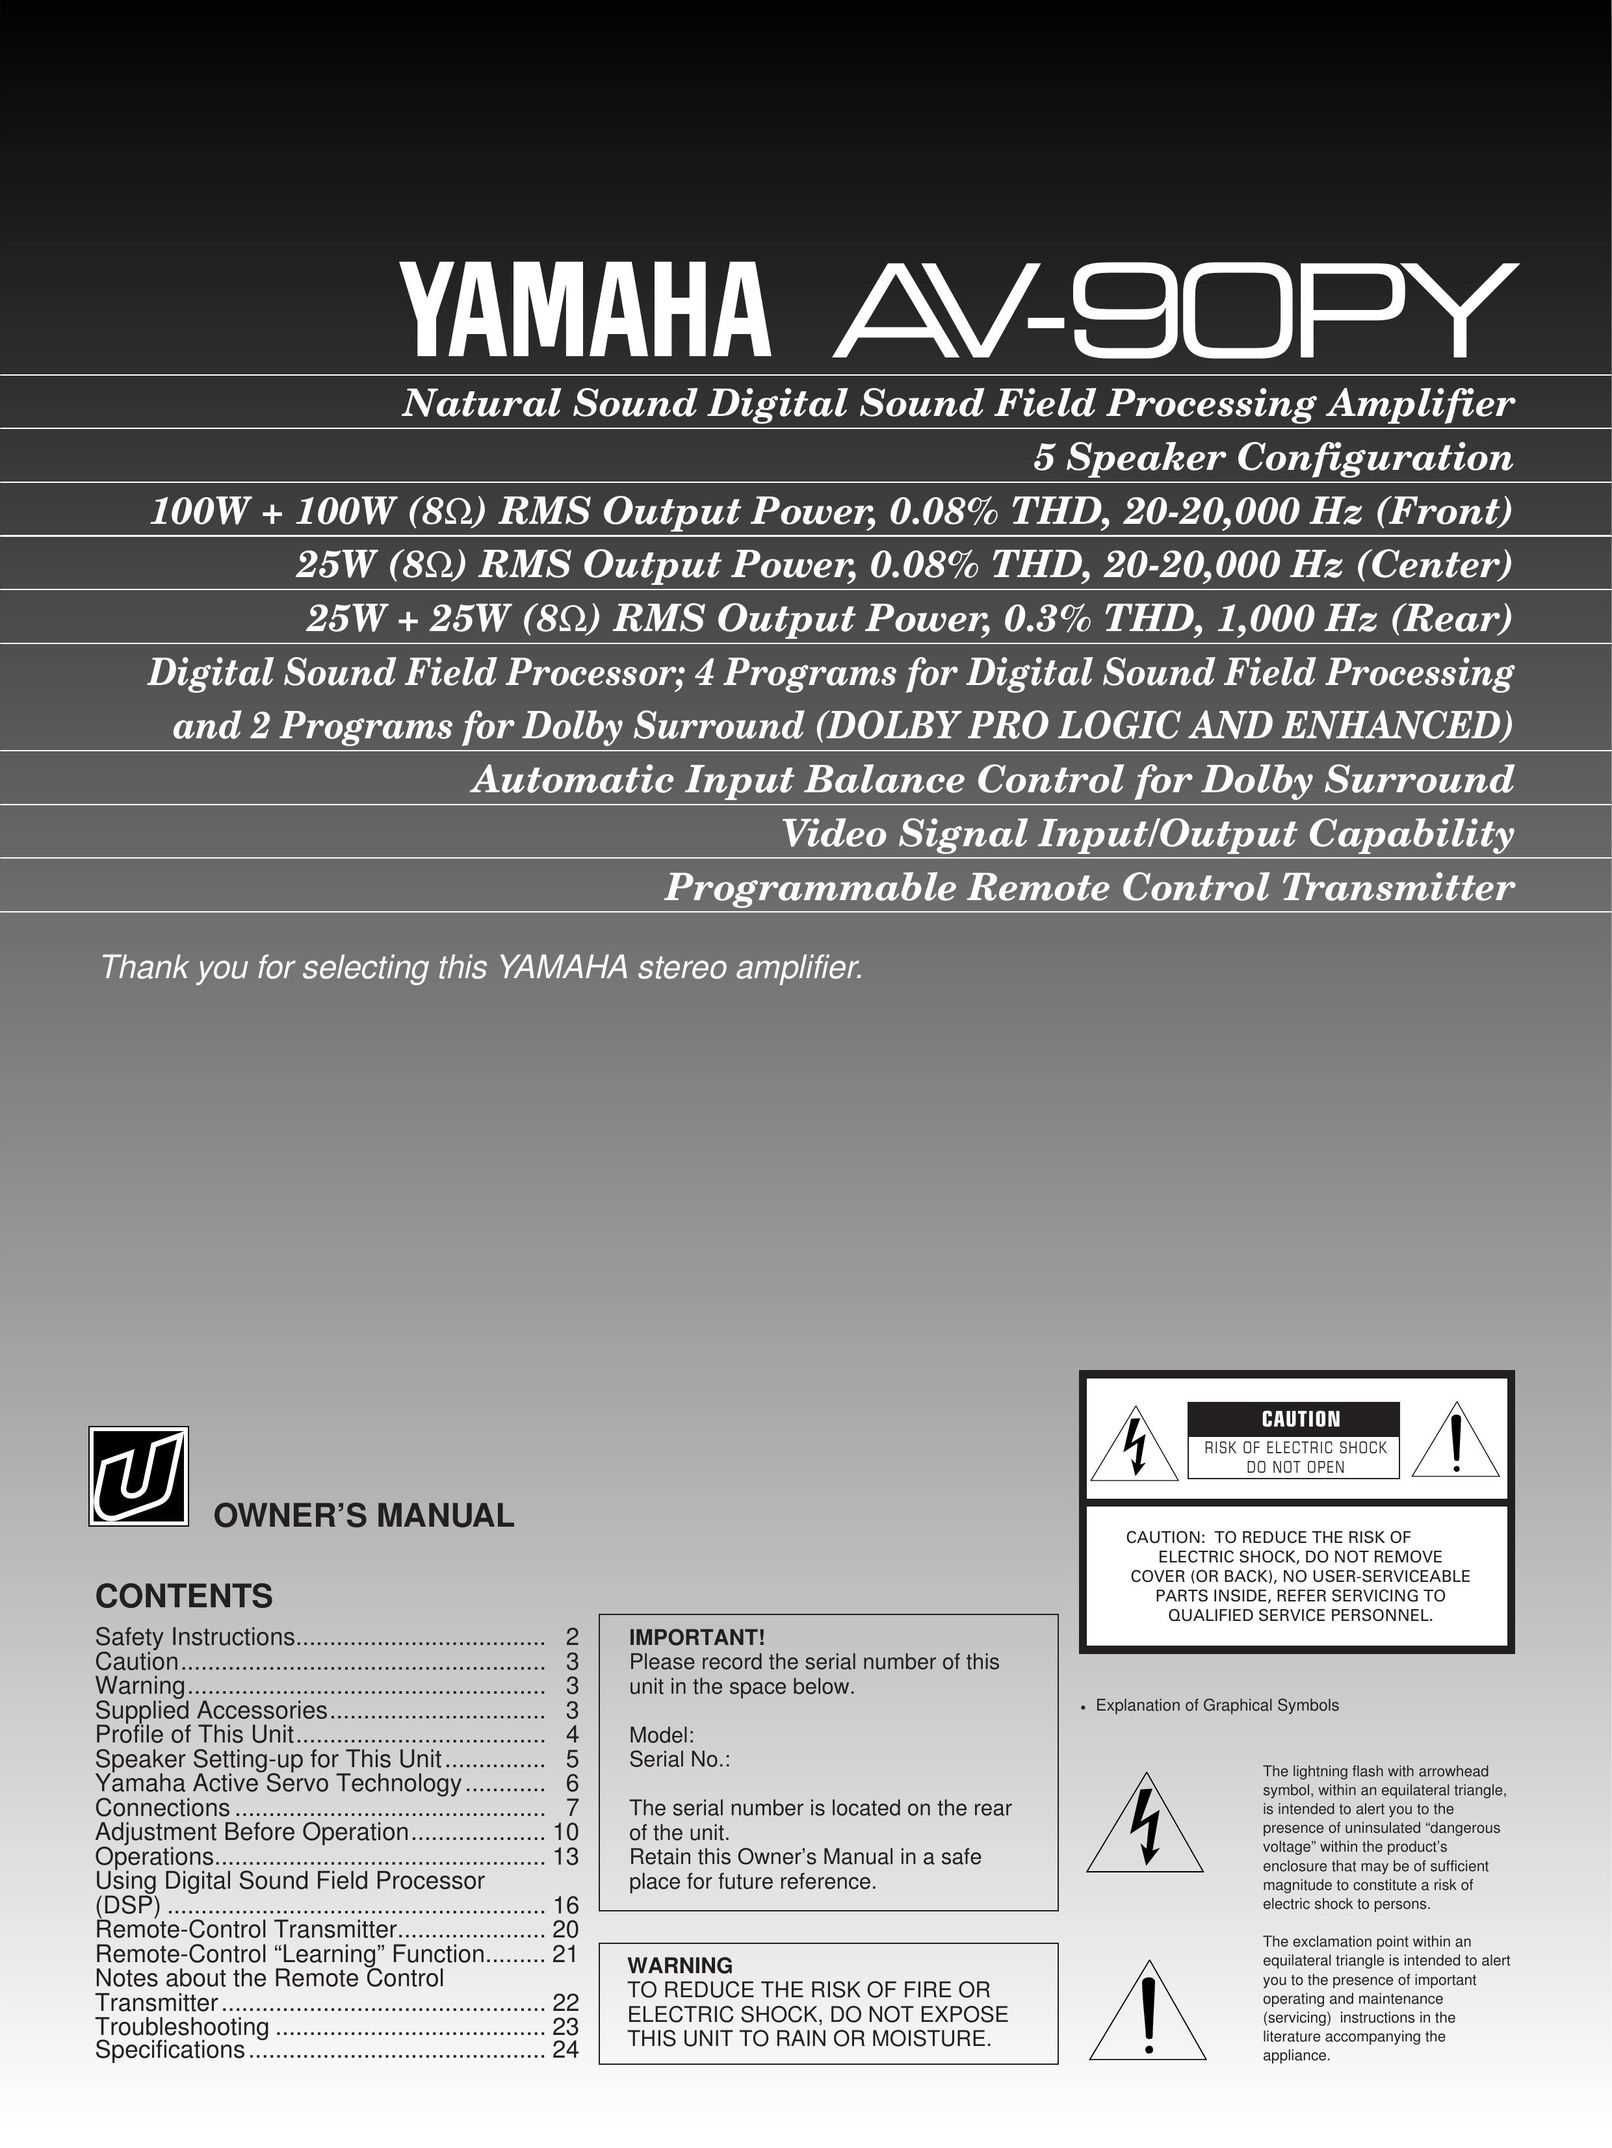 Yamaha AV-90PY Stereo Amplifier User Manual